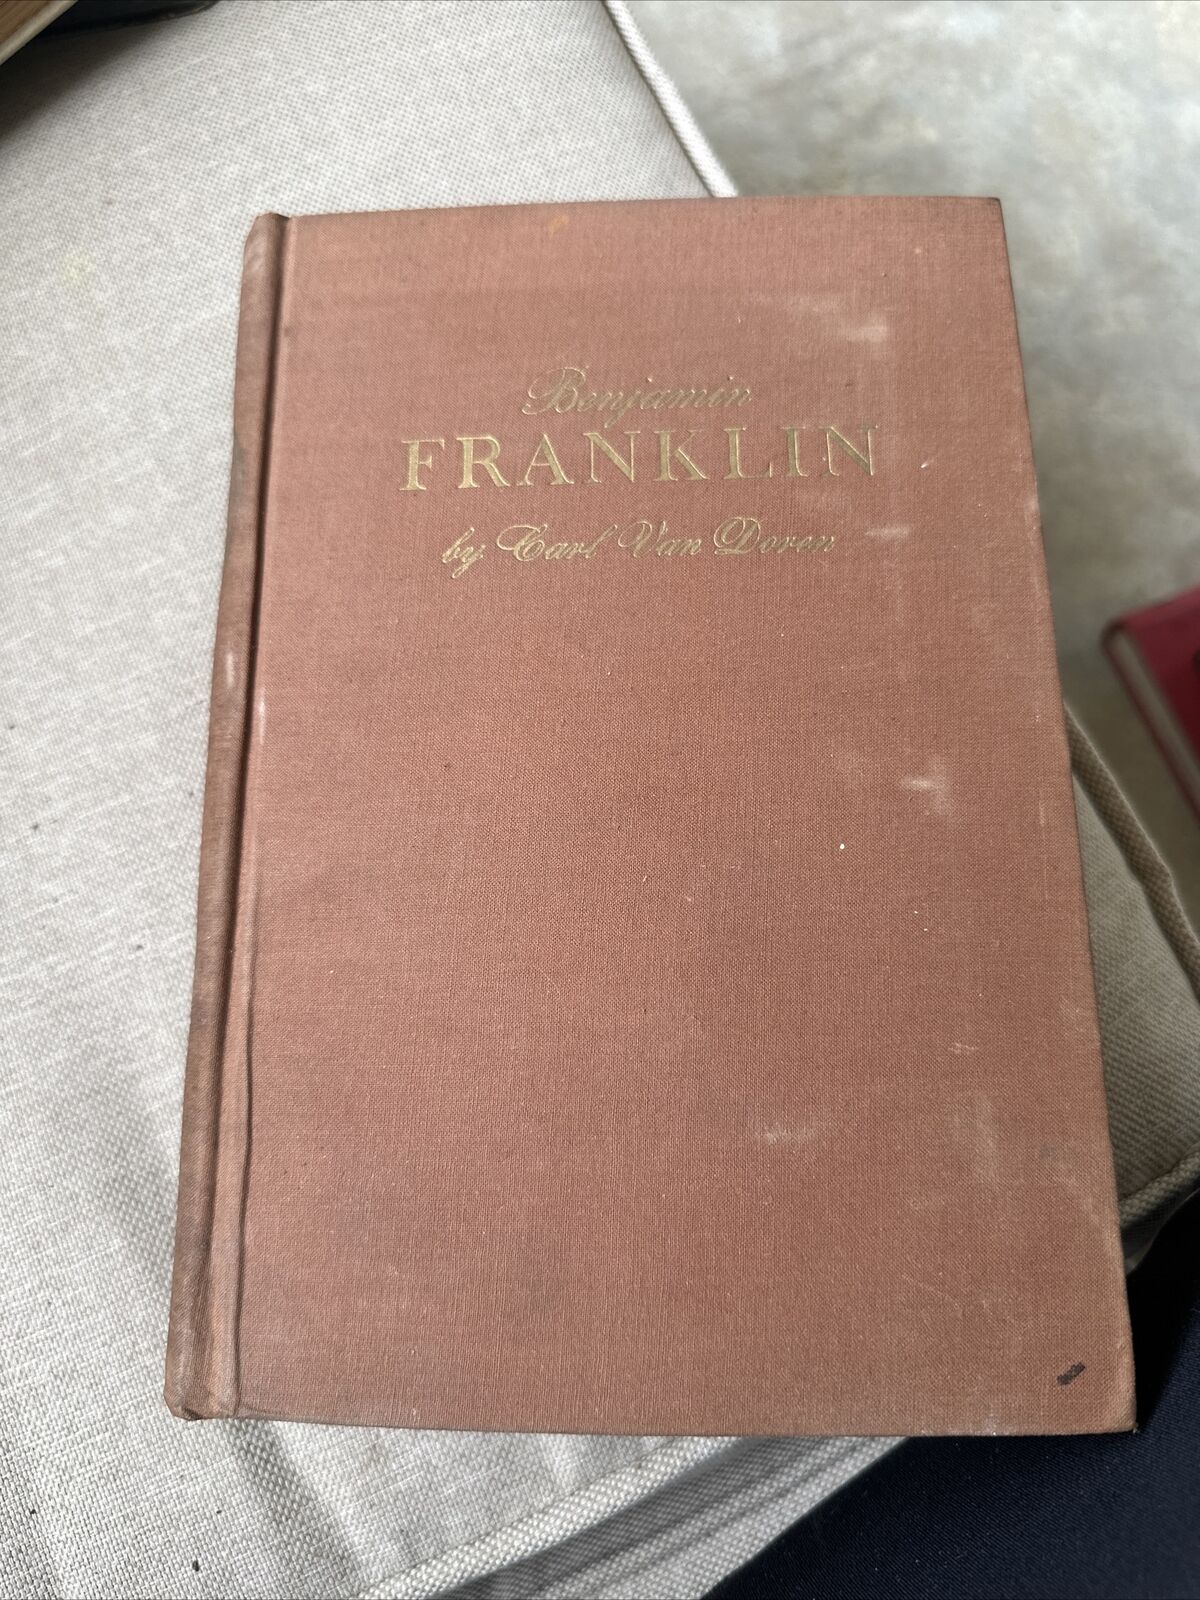 Vintage 1938 Benjamin Franklin by Carl Van Doren Hardcover First Edition Book